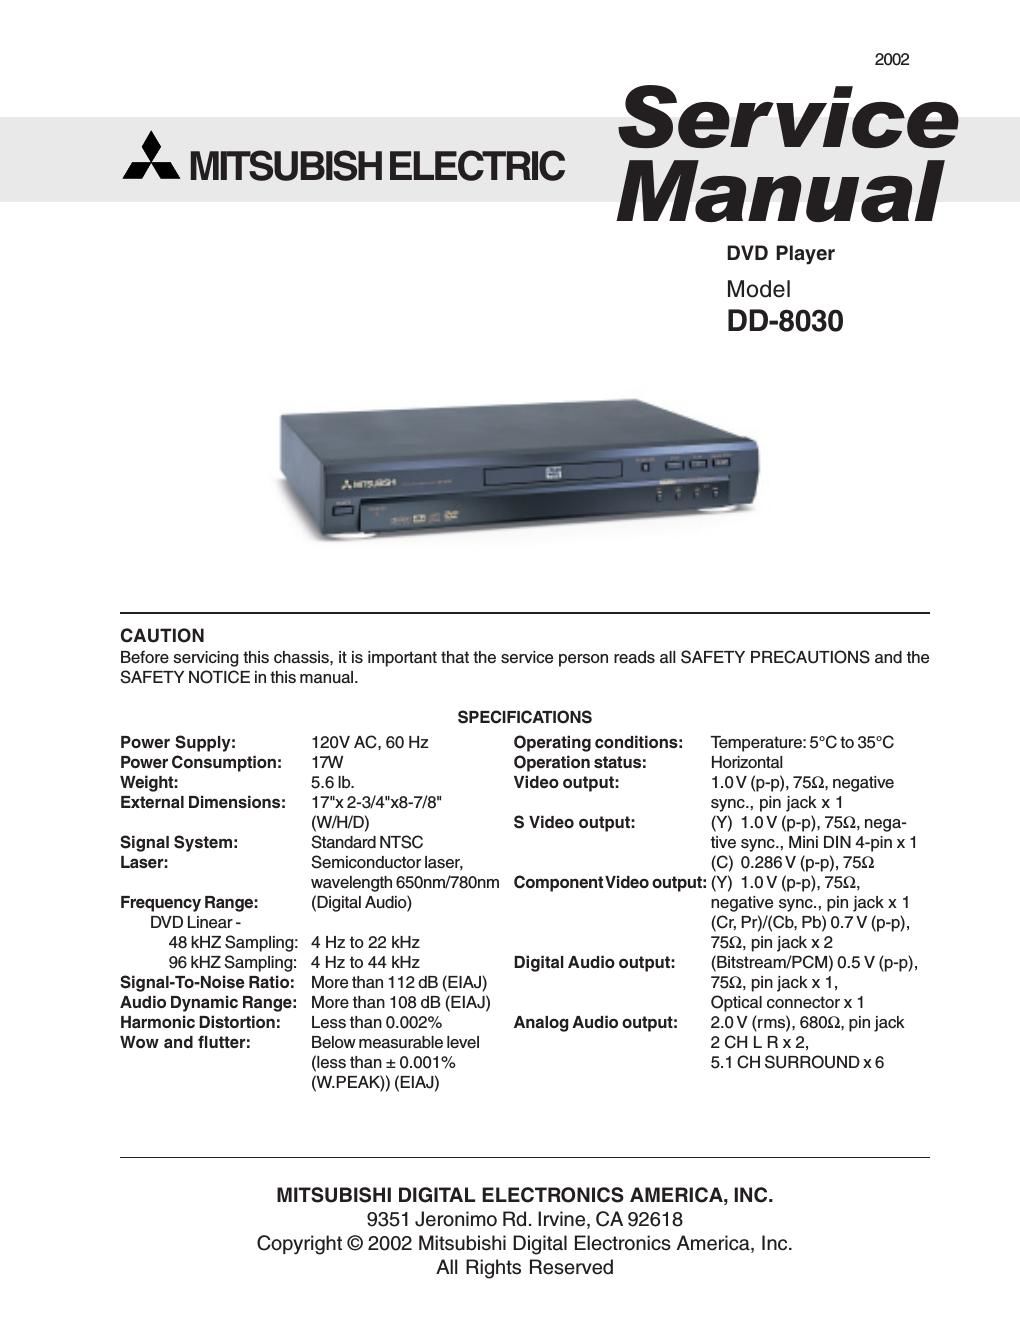 mitsubishi dd 8030 service manual